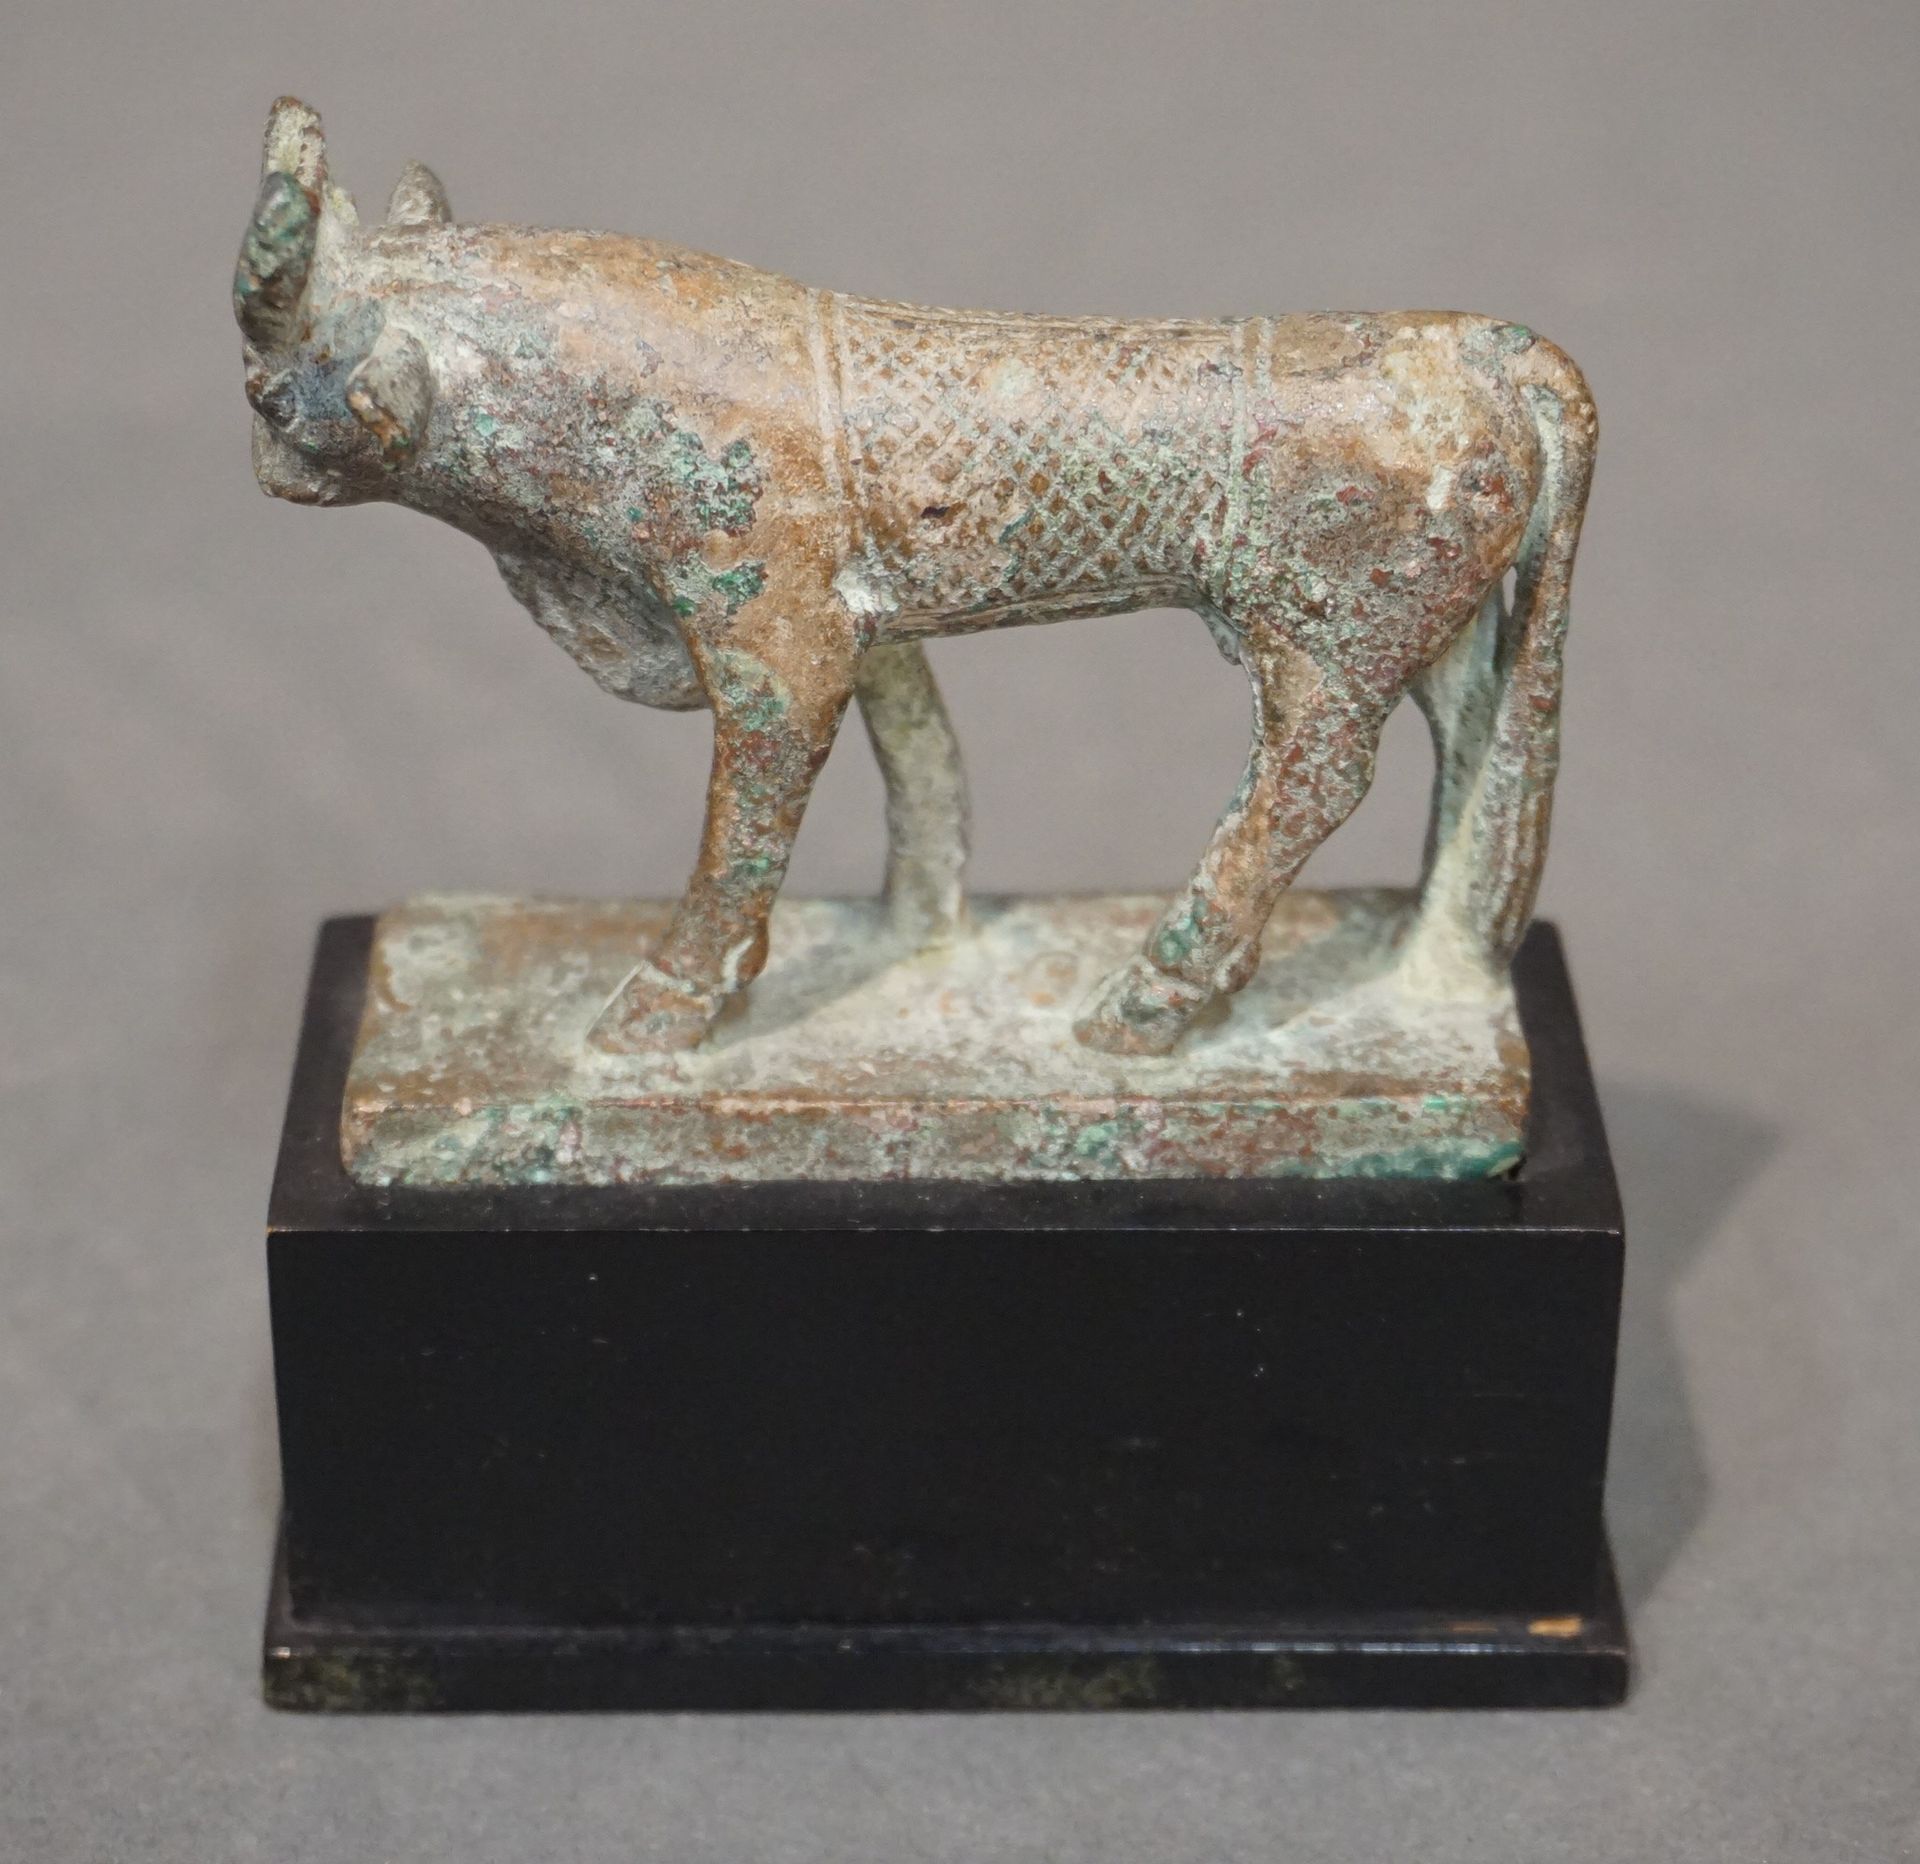 Null 哈托尔牛的塑像。背面刻有方形图案的盖子。青铜，带有光滑的绿色铜锈。缺少太阳盘。埃及，晚期或托勒密时期，公元前664-32年 l. ：7厘米